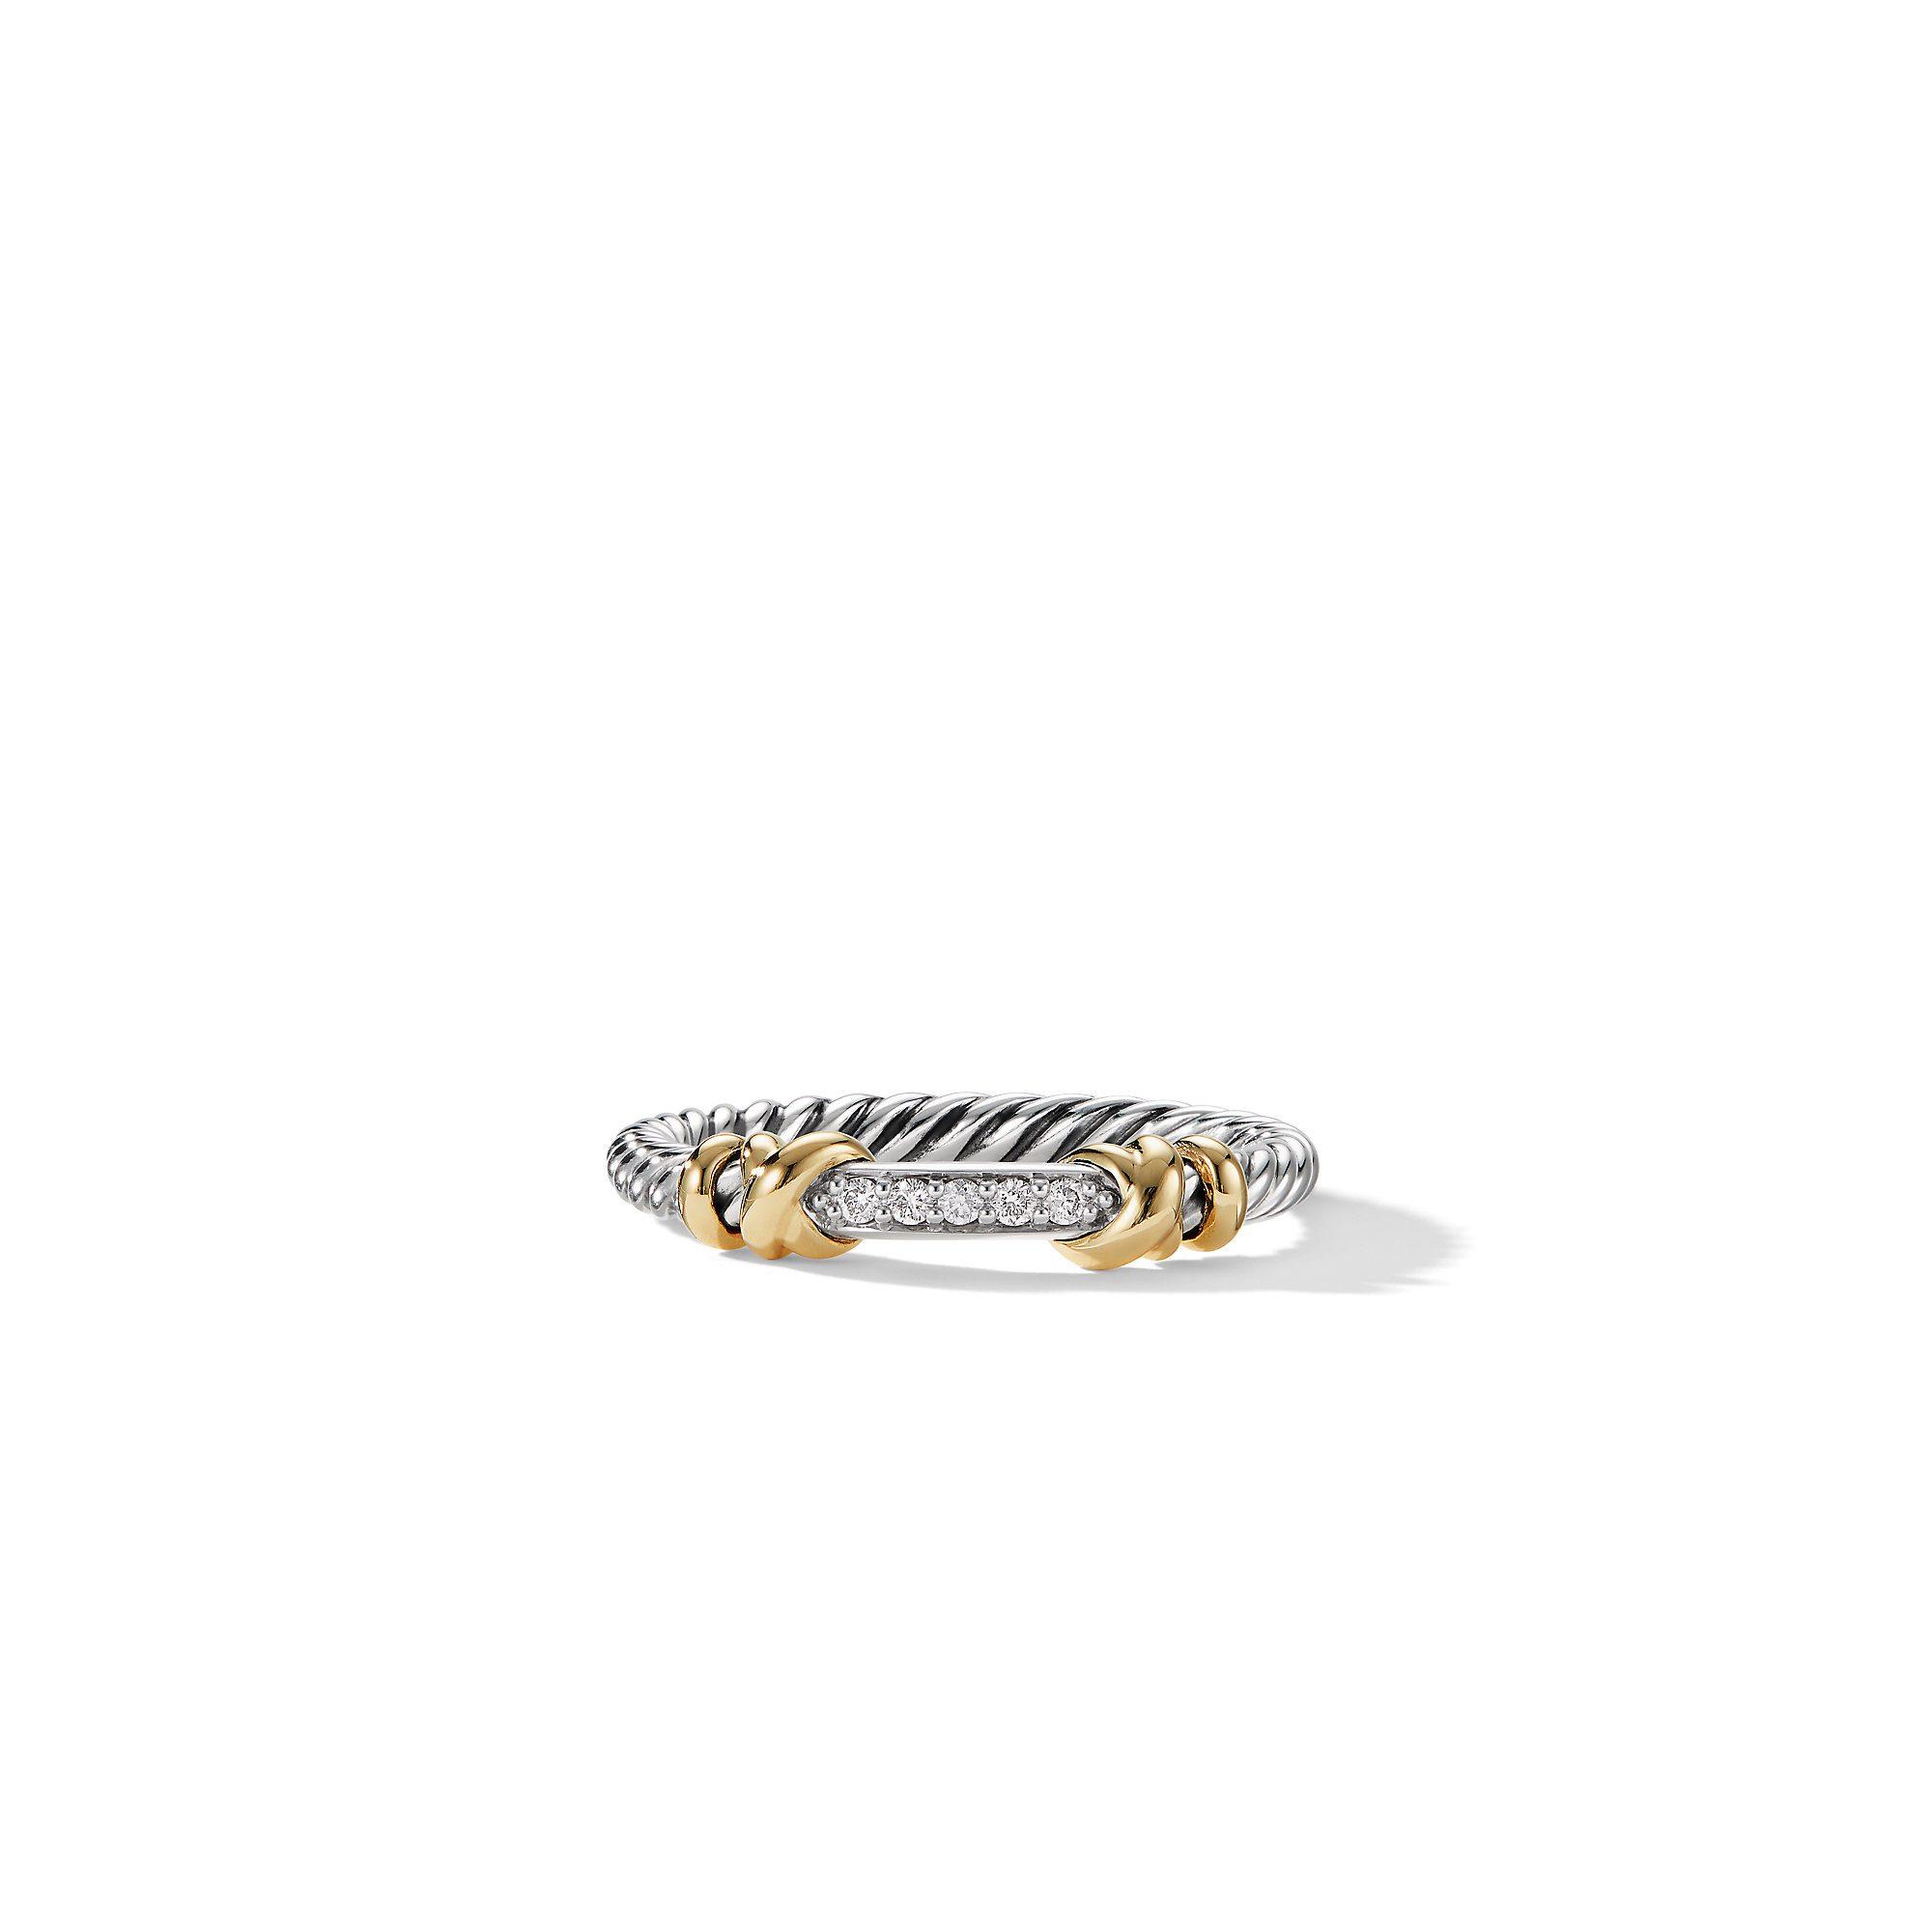 David Yurman Petite Helena Wrap Ring with 18K Yellow Gold and Diamonds | Front View